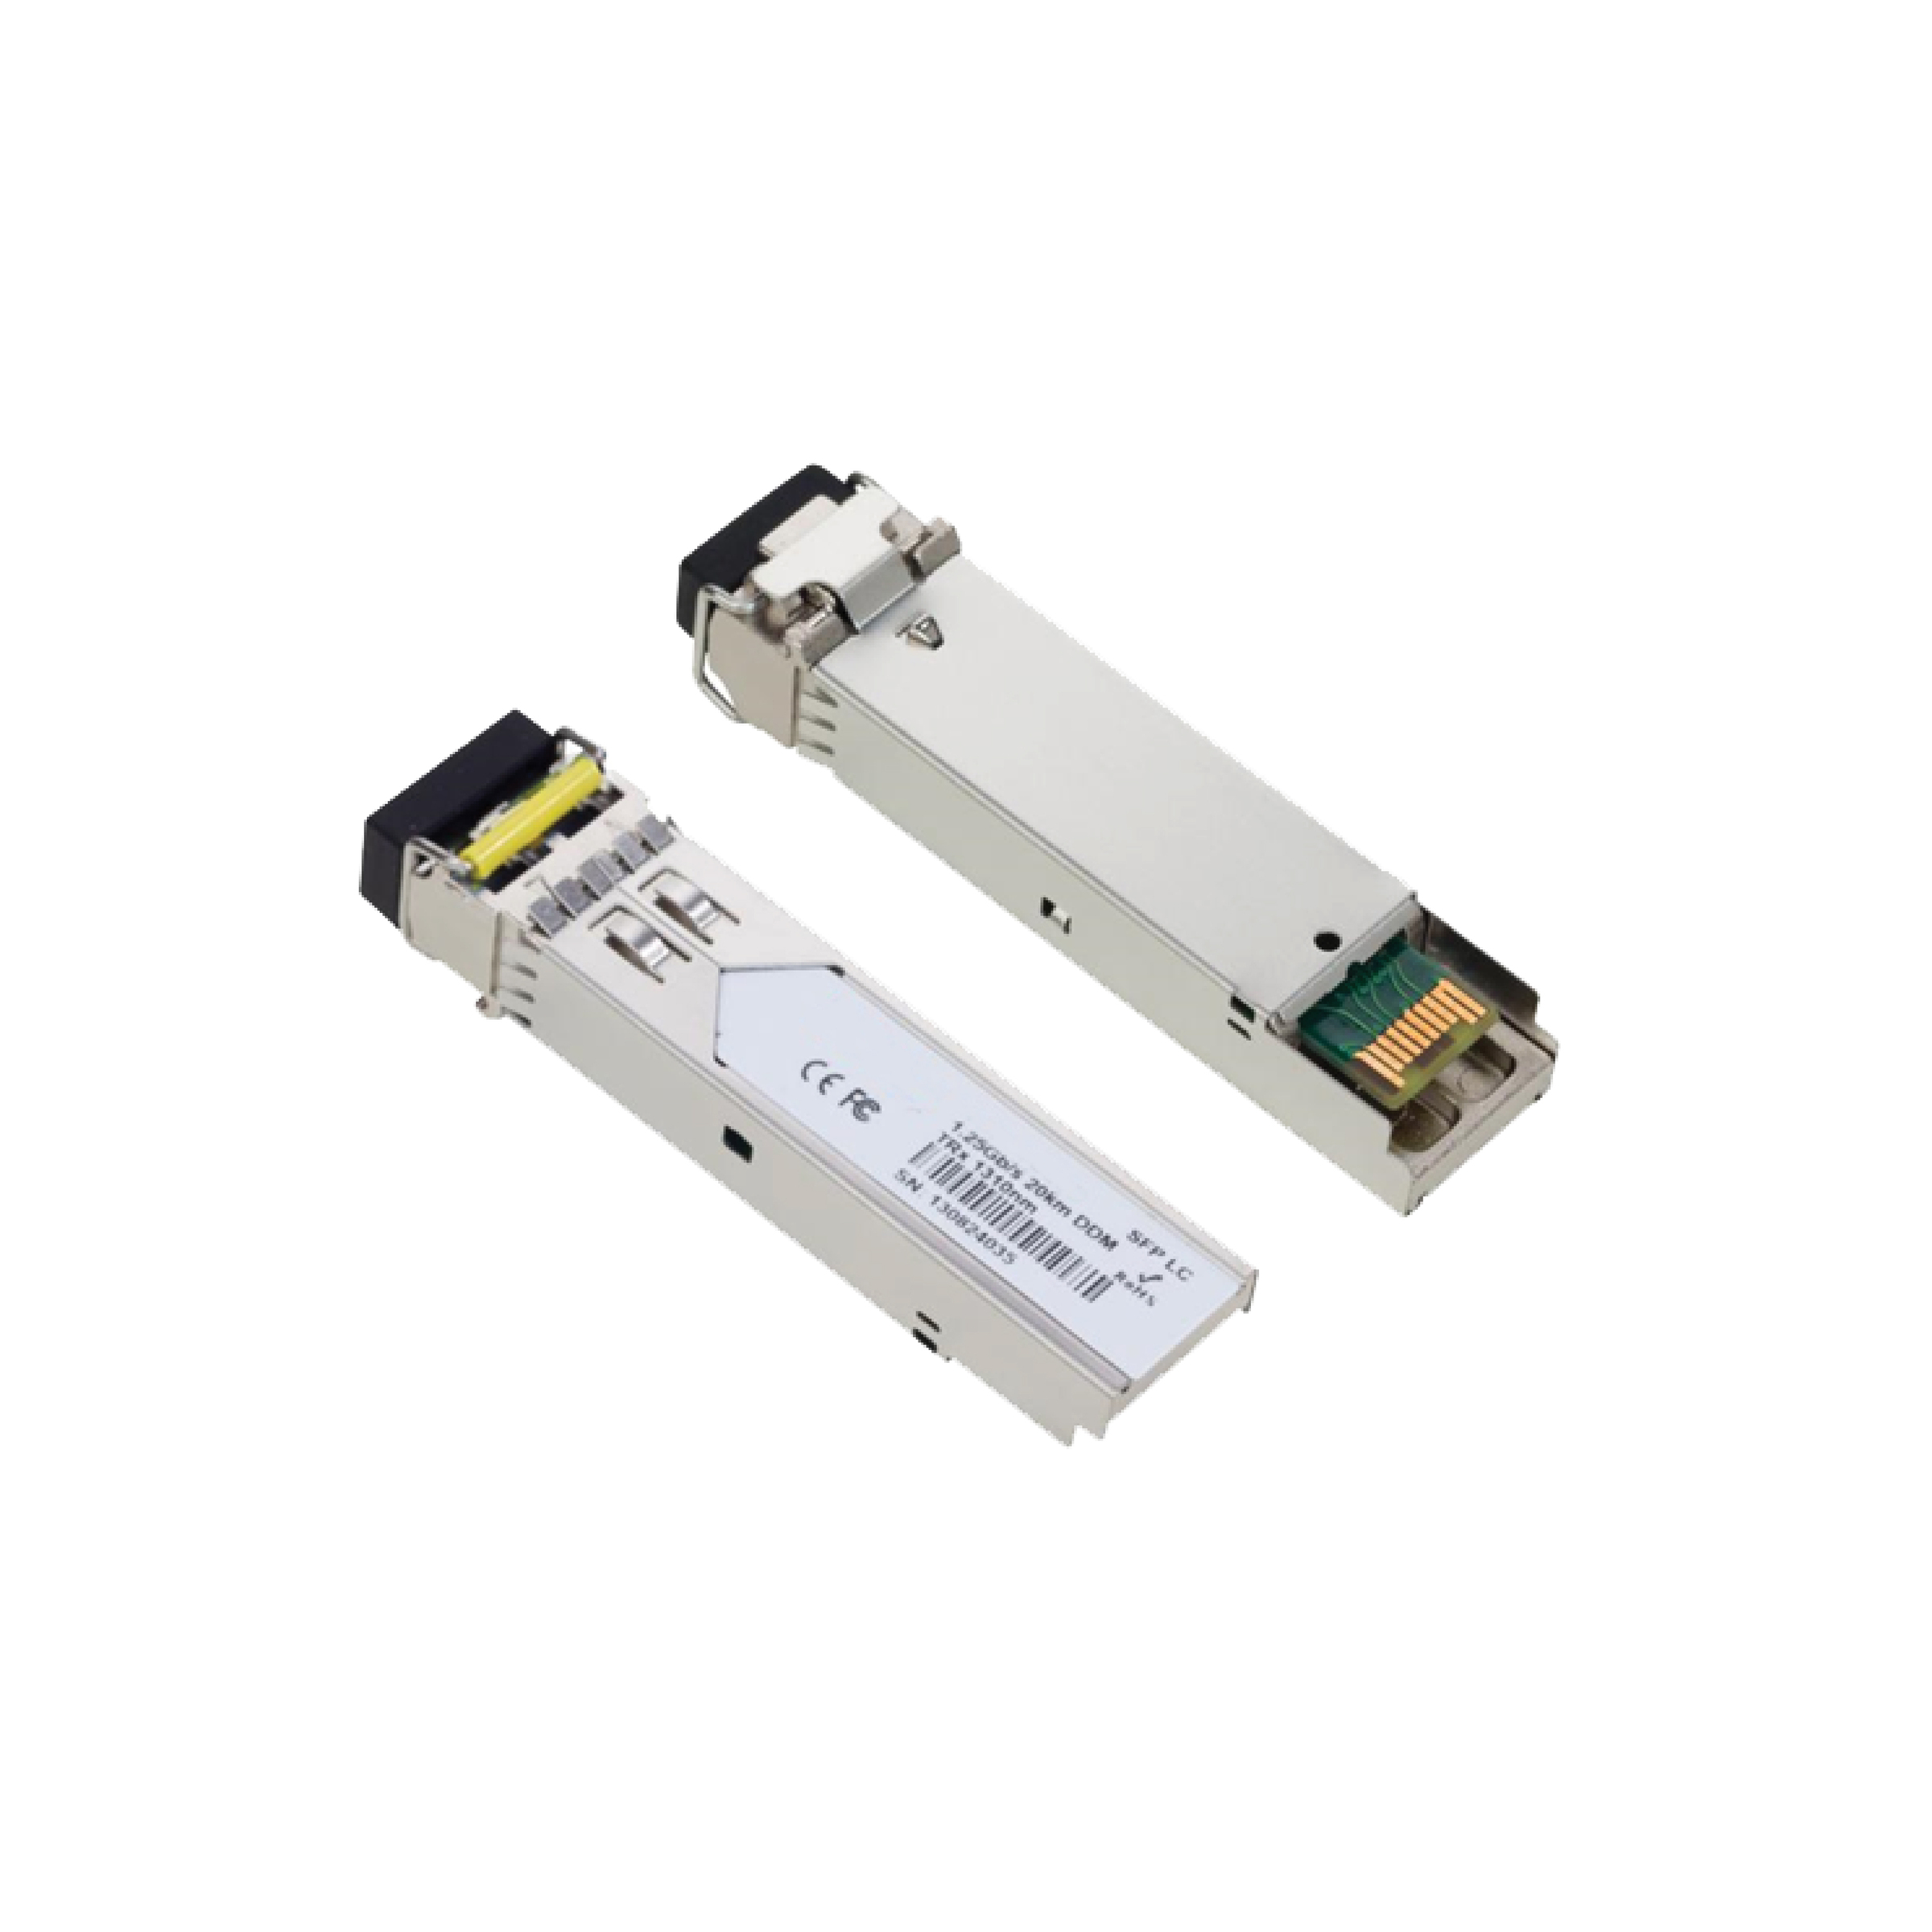 Fiber_SFP_1.25Gbps SFP Transceiver, 120km Reach Hot Pluggable, DX LC,  +3.3V, 1550nm DFB-LD & PIN, Single-mode.jpg